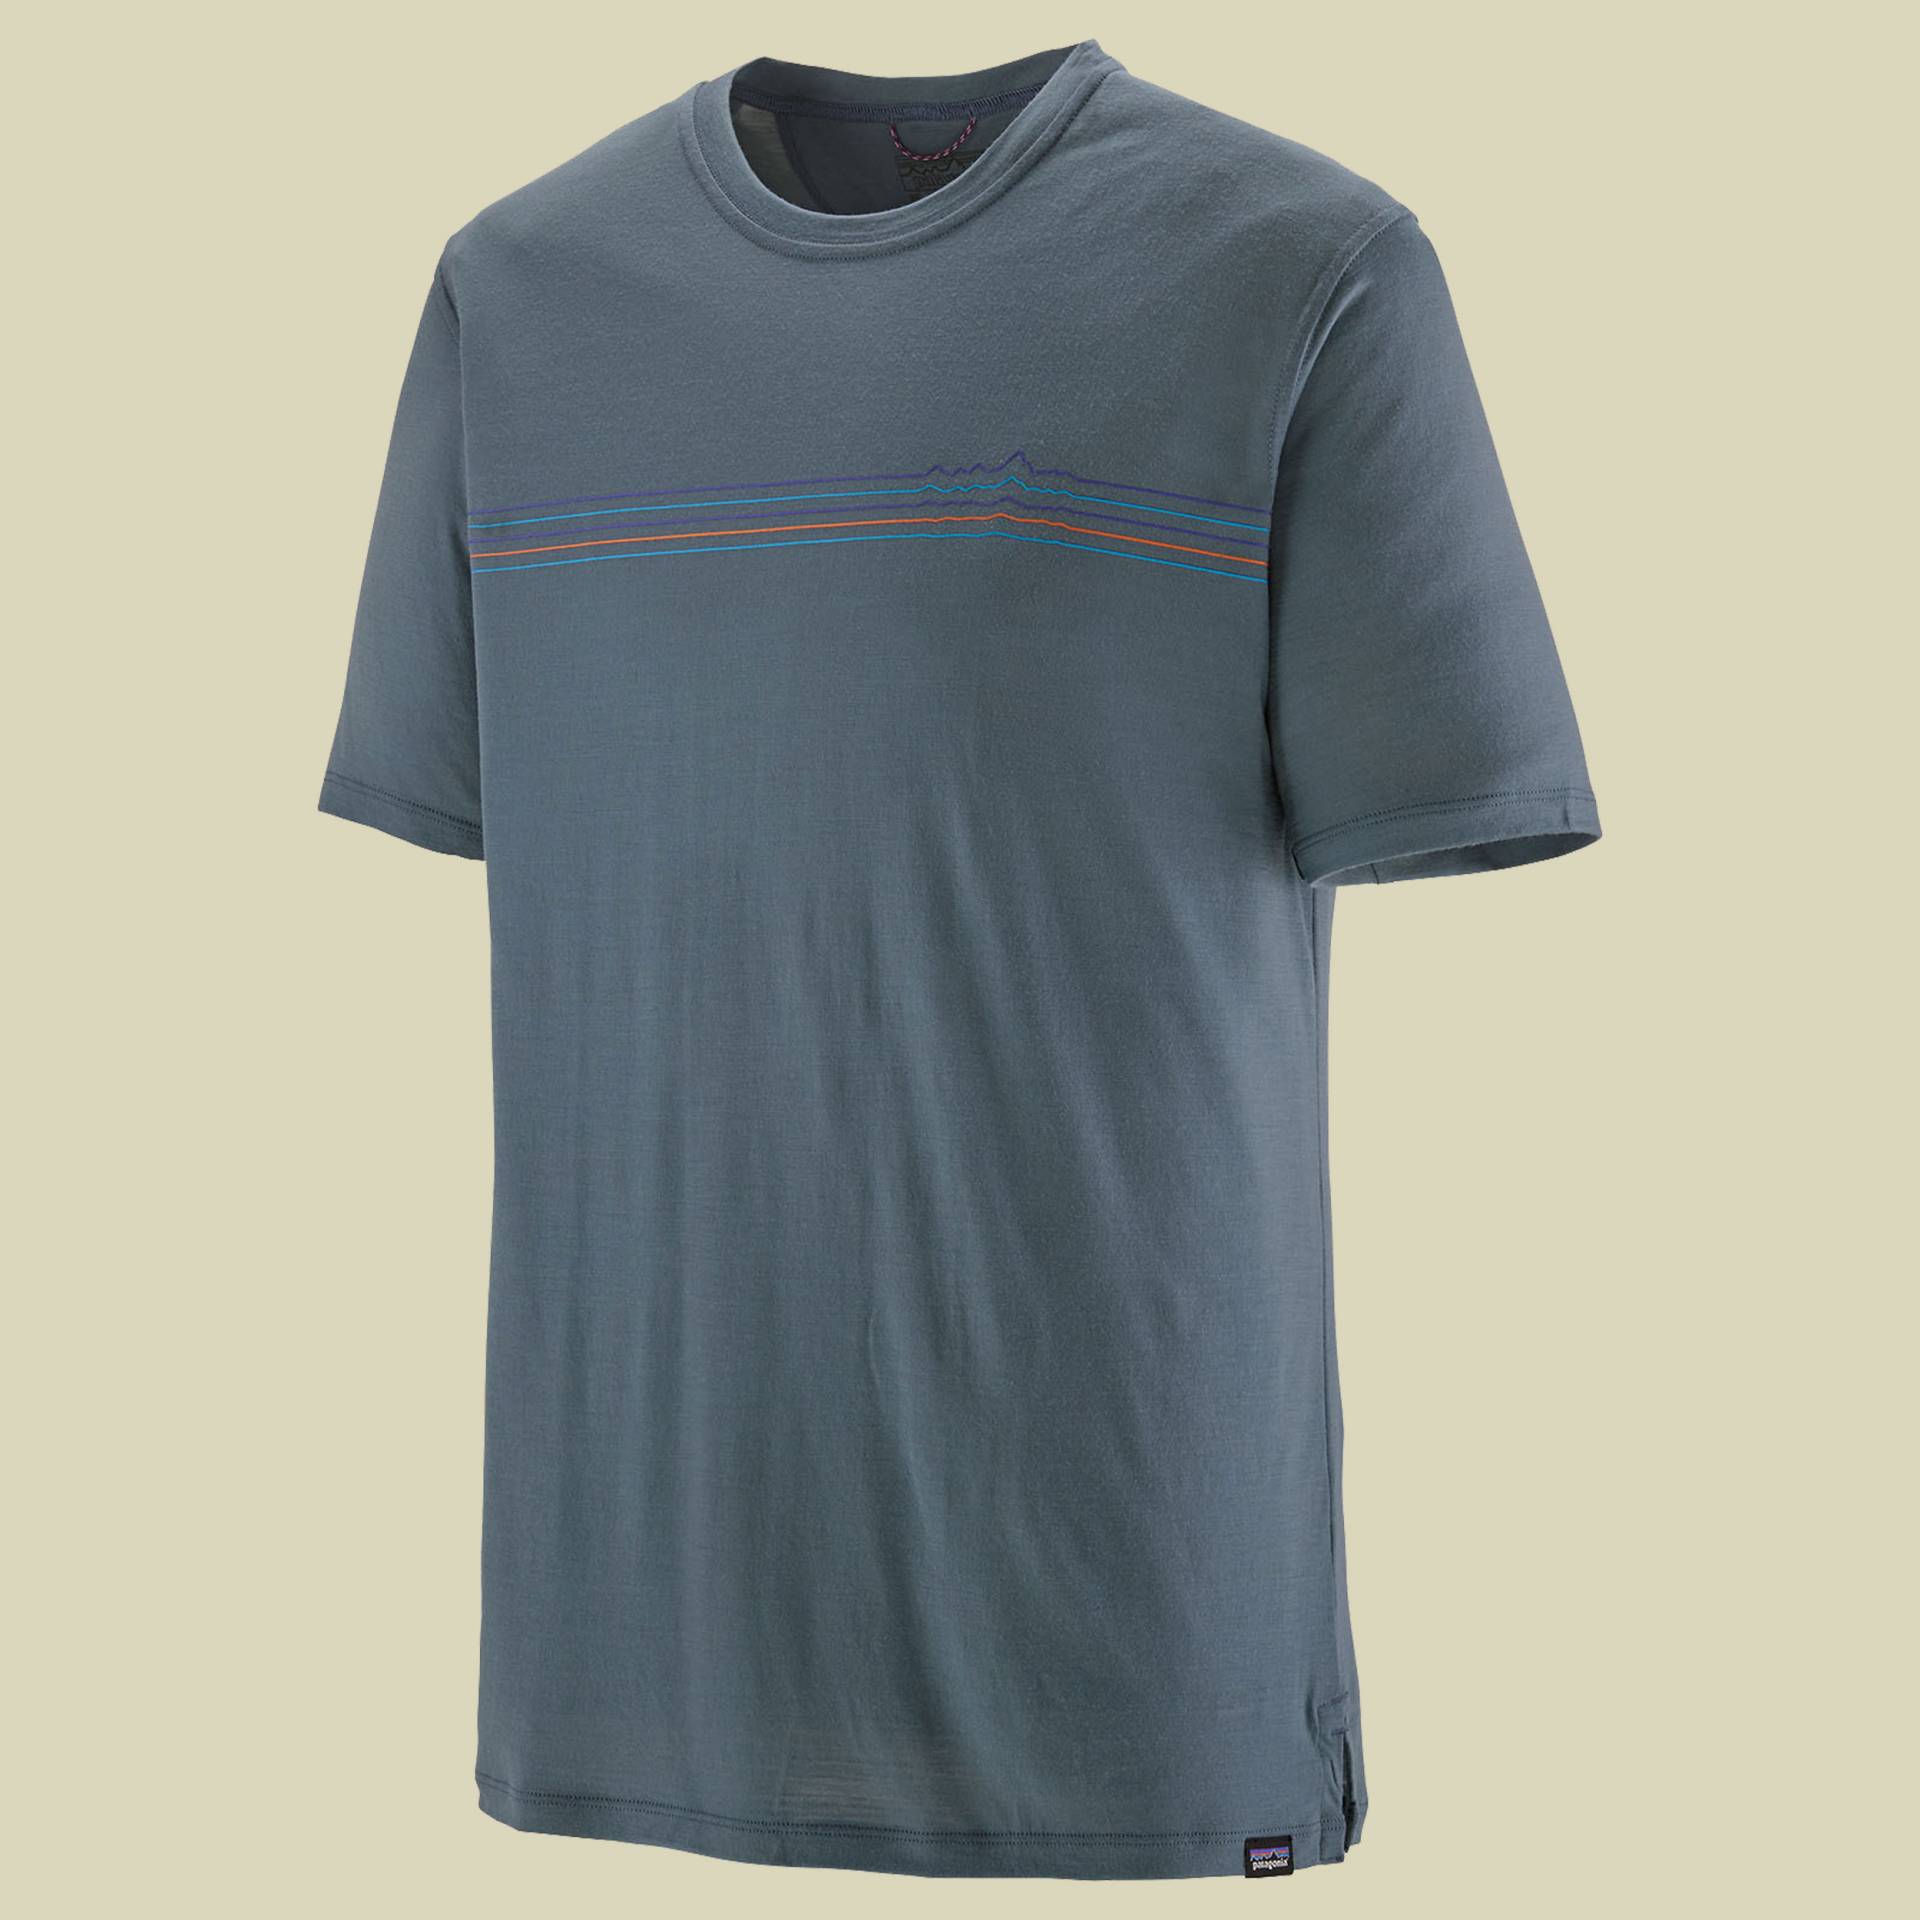 Cap Cool Merino Blend Graphic Shirt Men S - fitz roy fader:utility blue von Patagonia